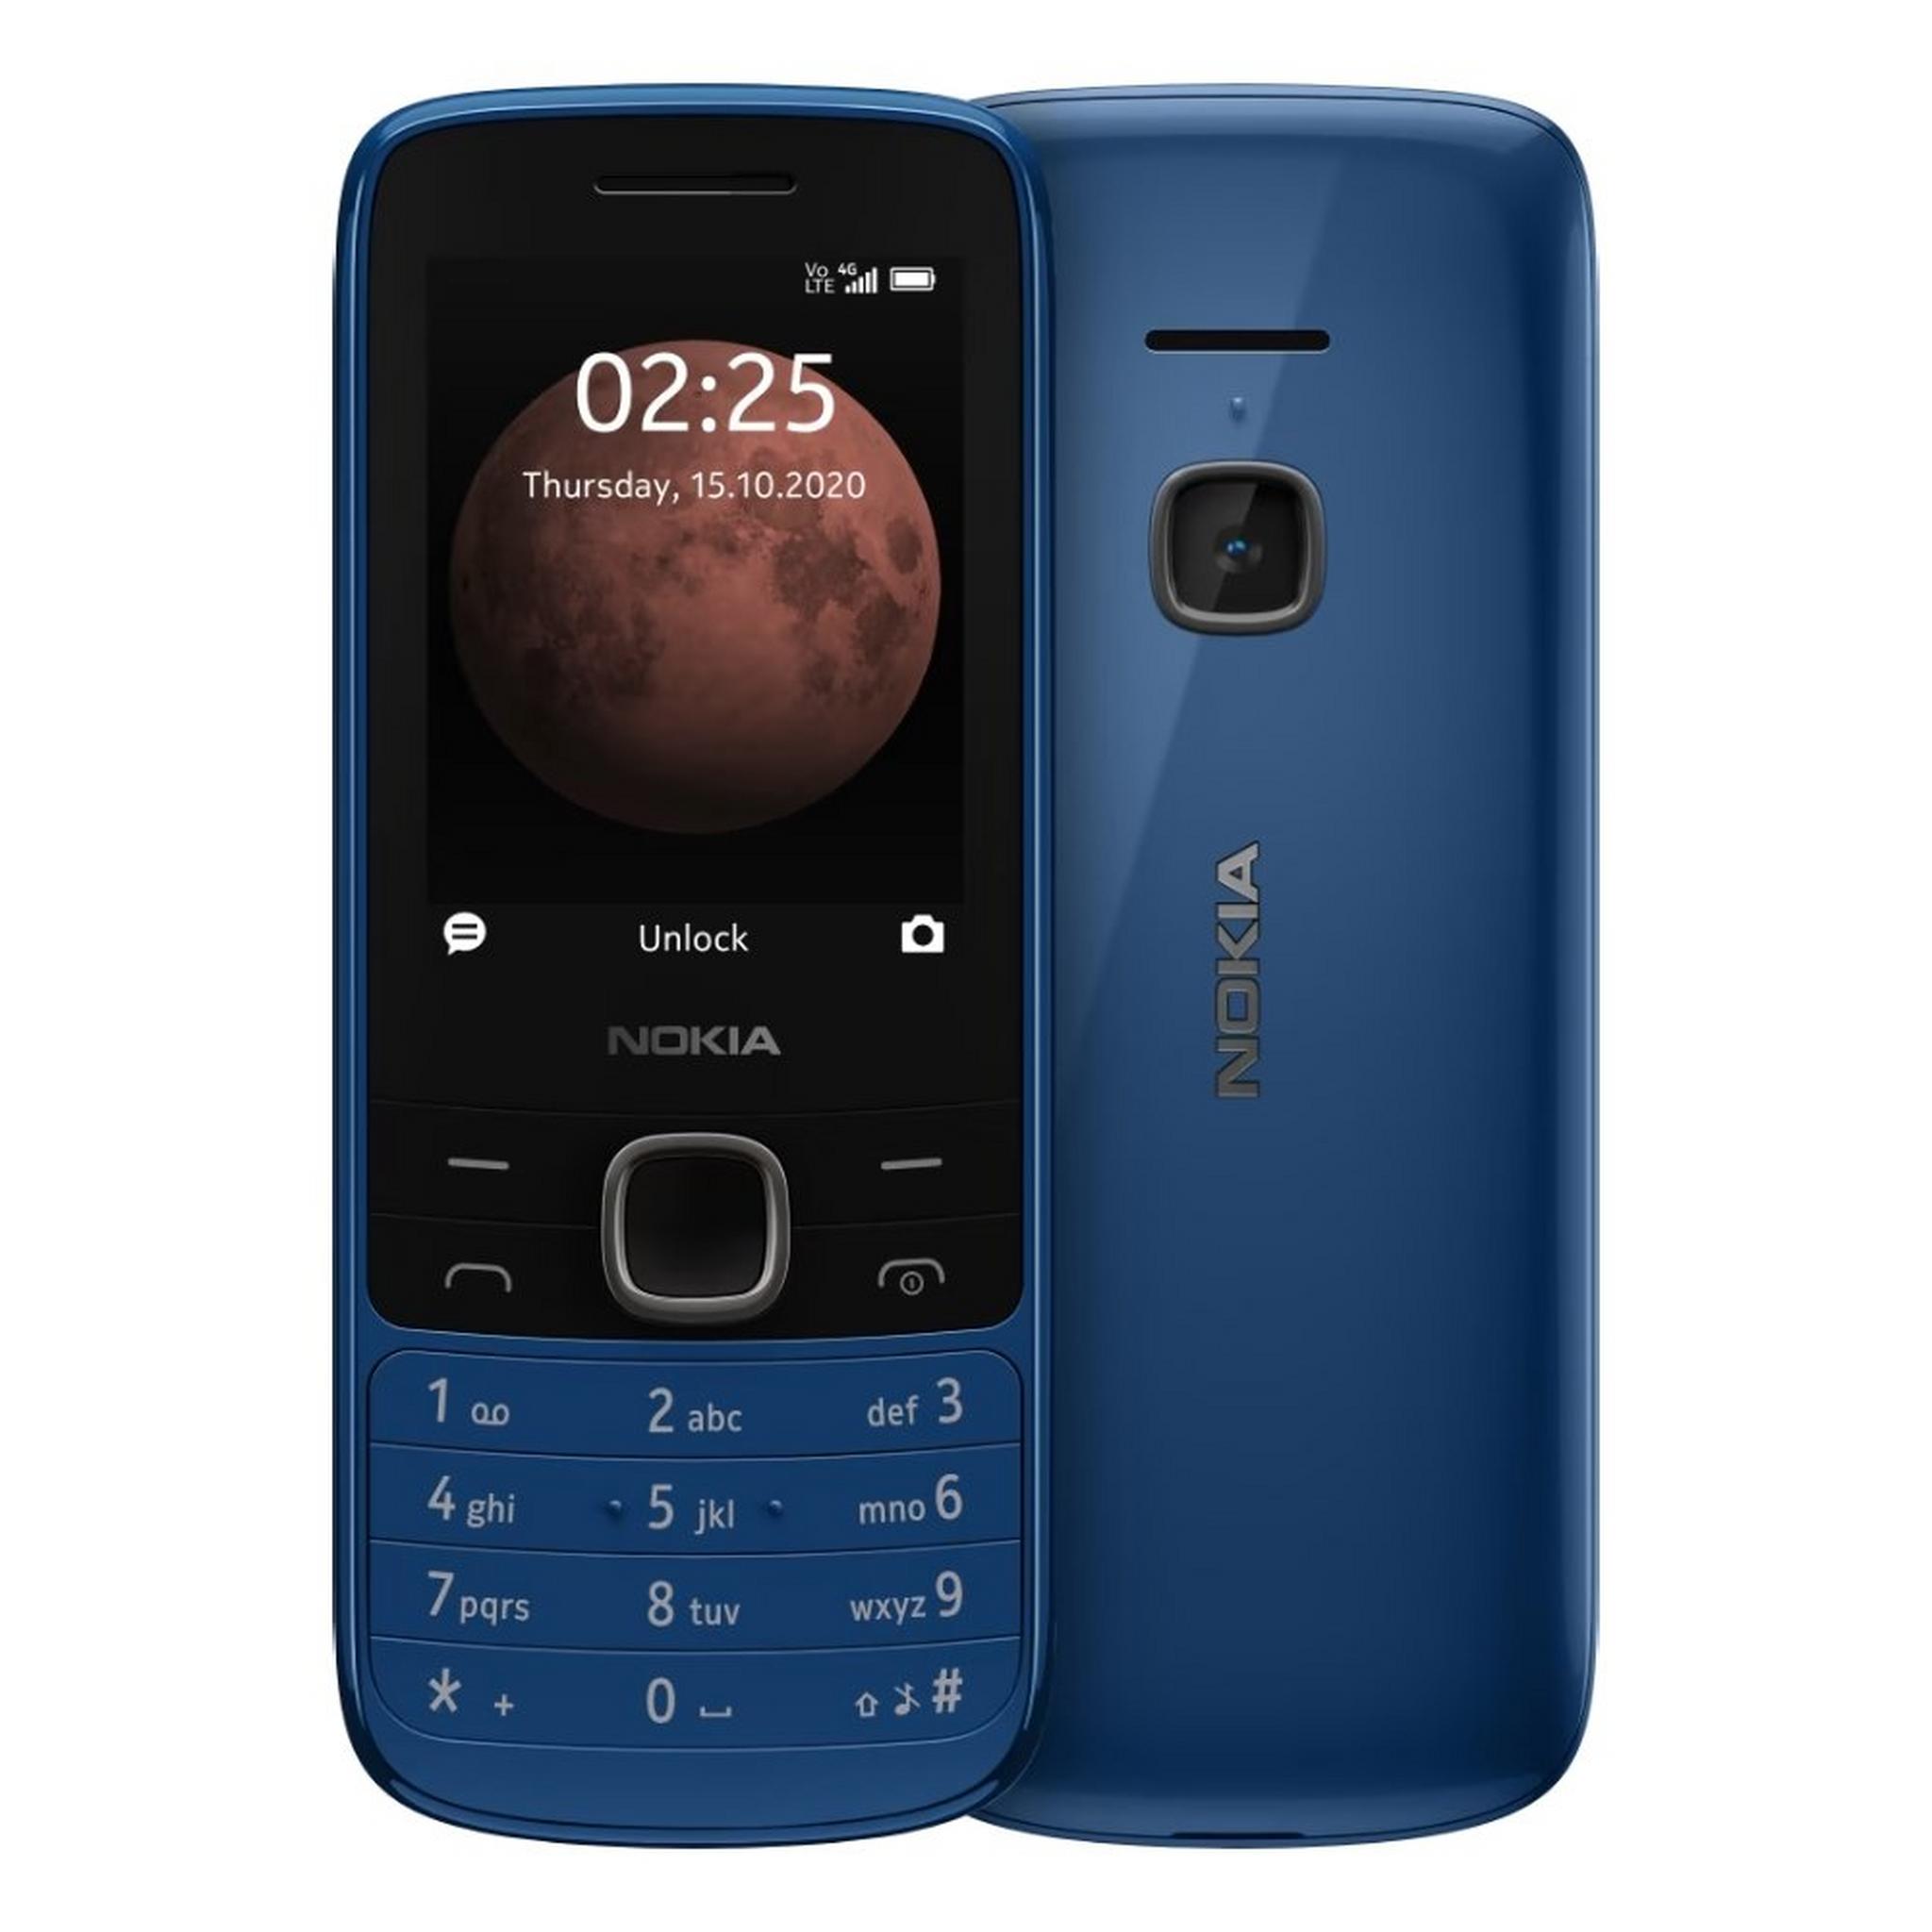 Nokia 225 TA-1278 128MB 4G Phone - Blue